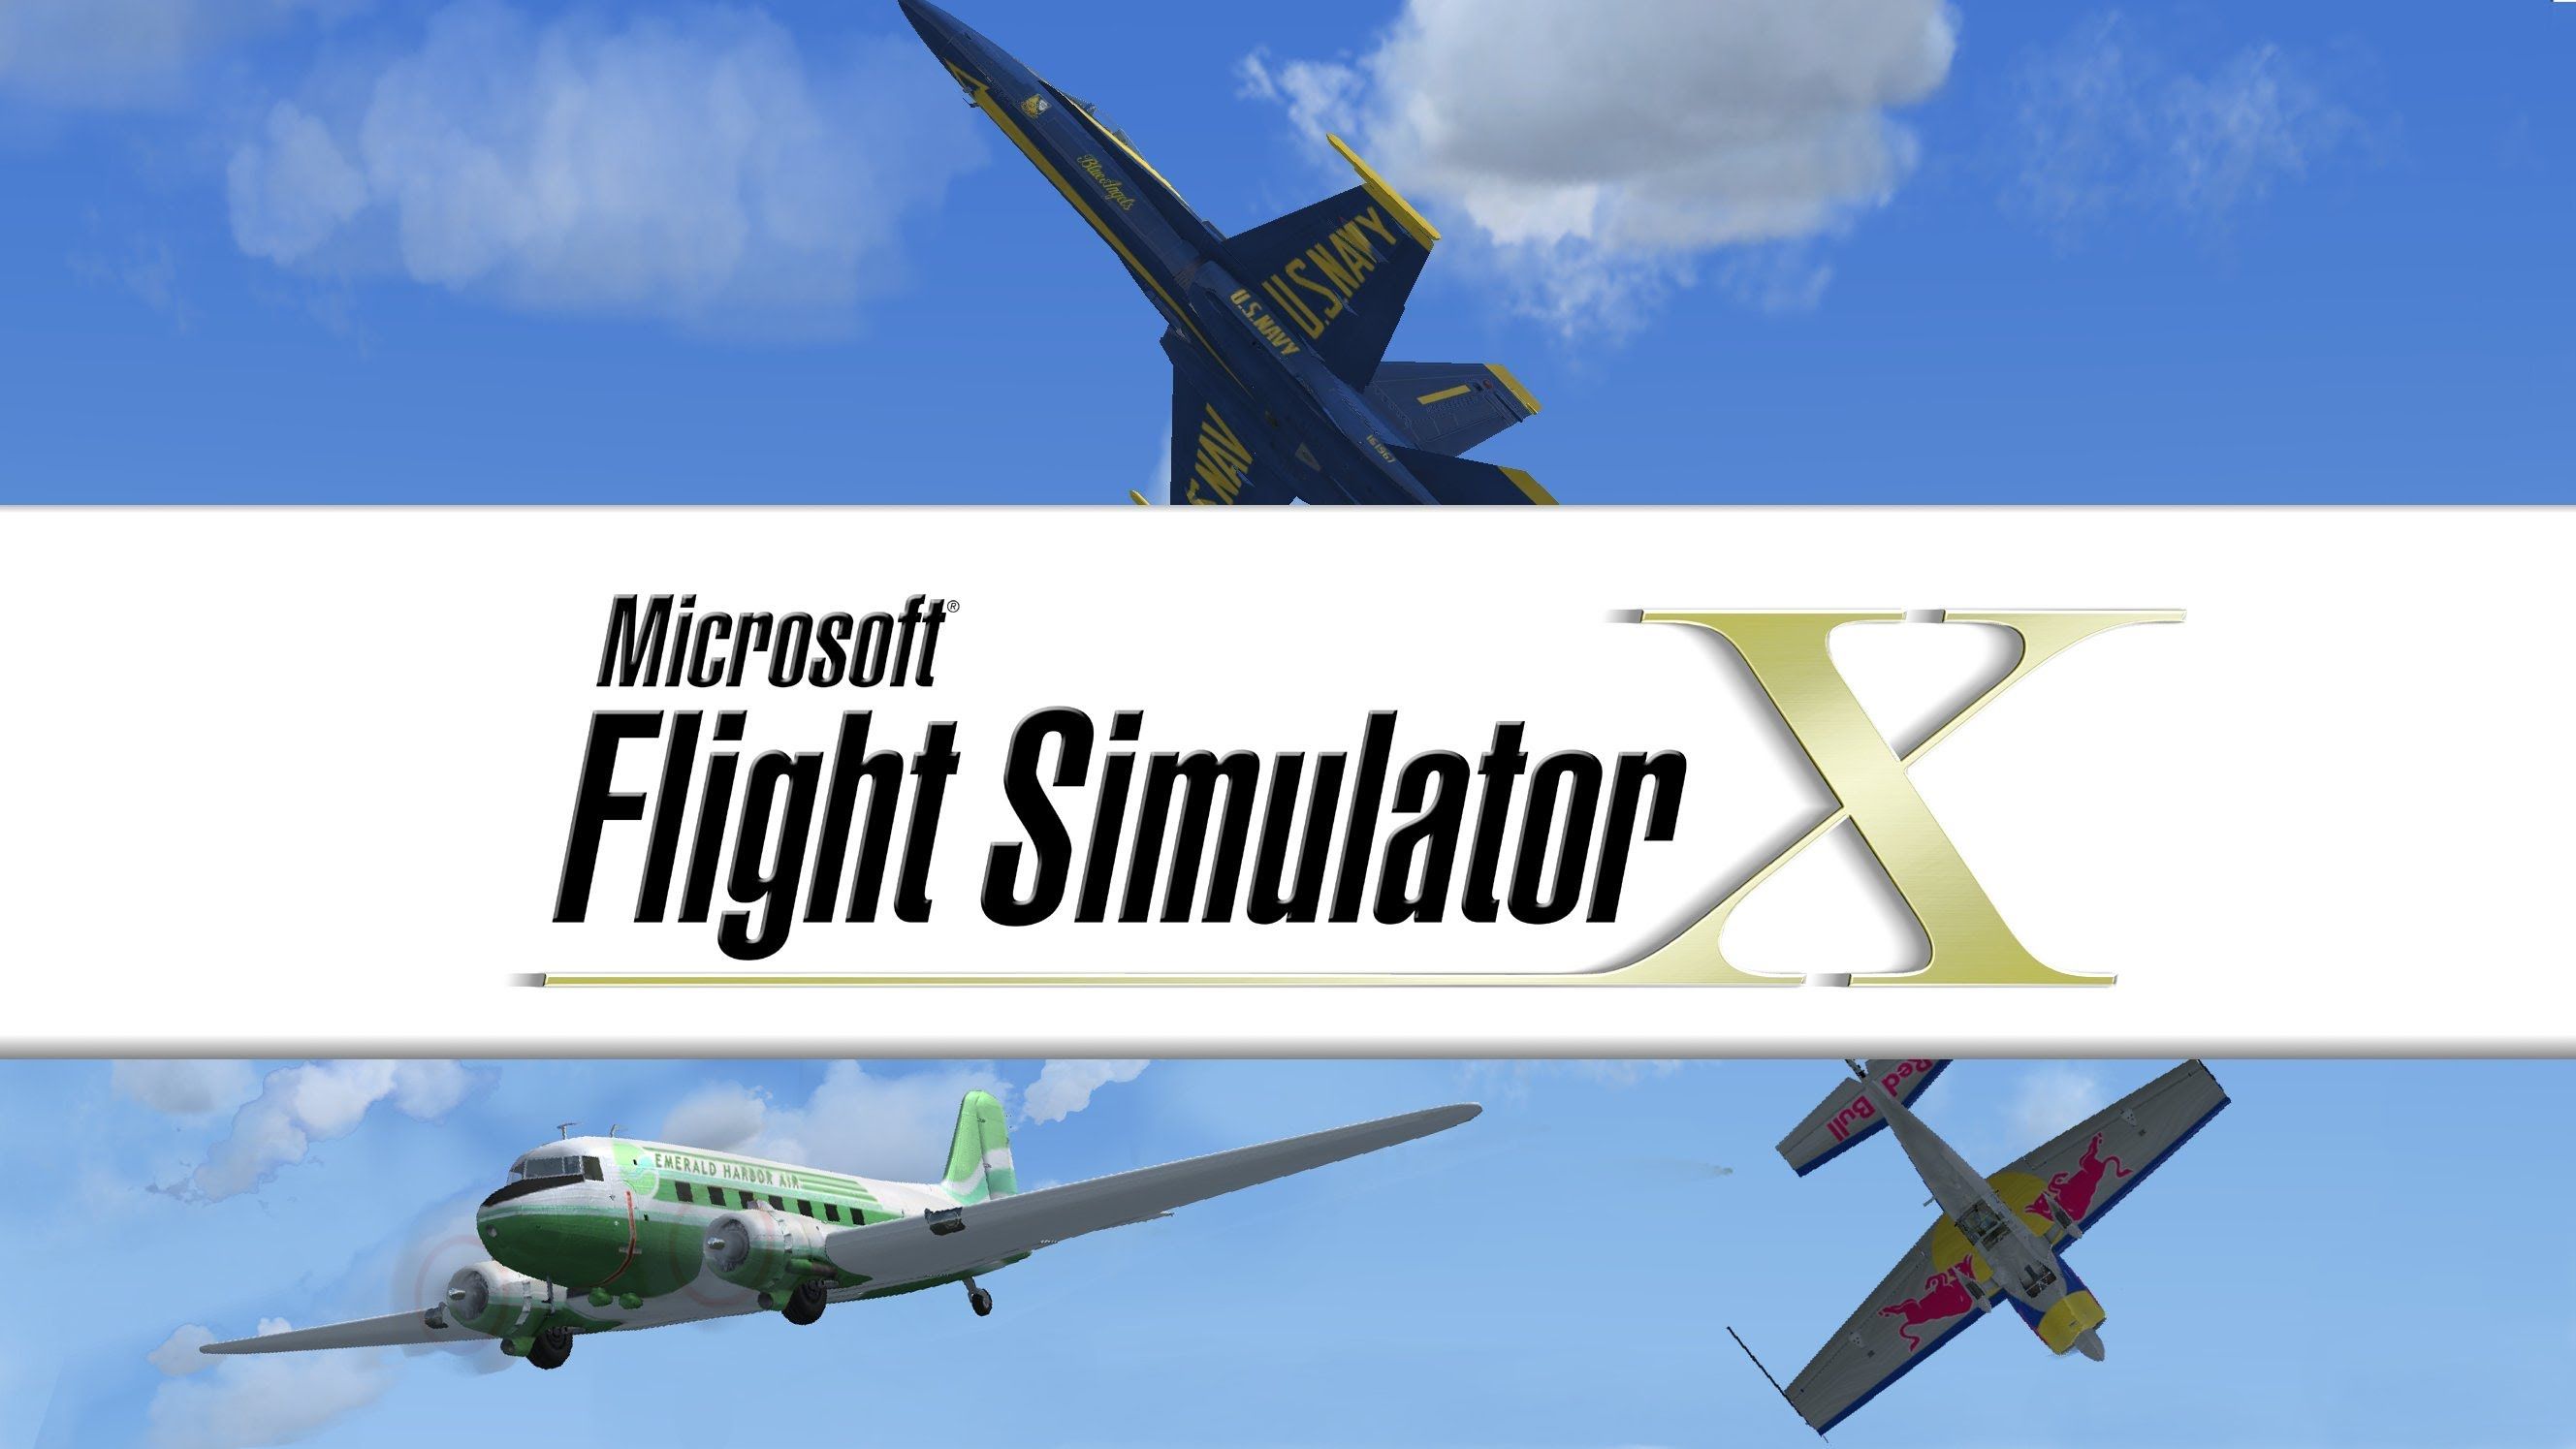 720p microsoft flight simulator wallpaper